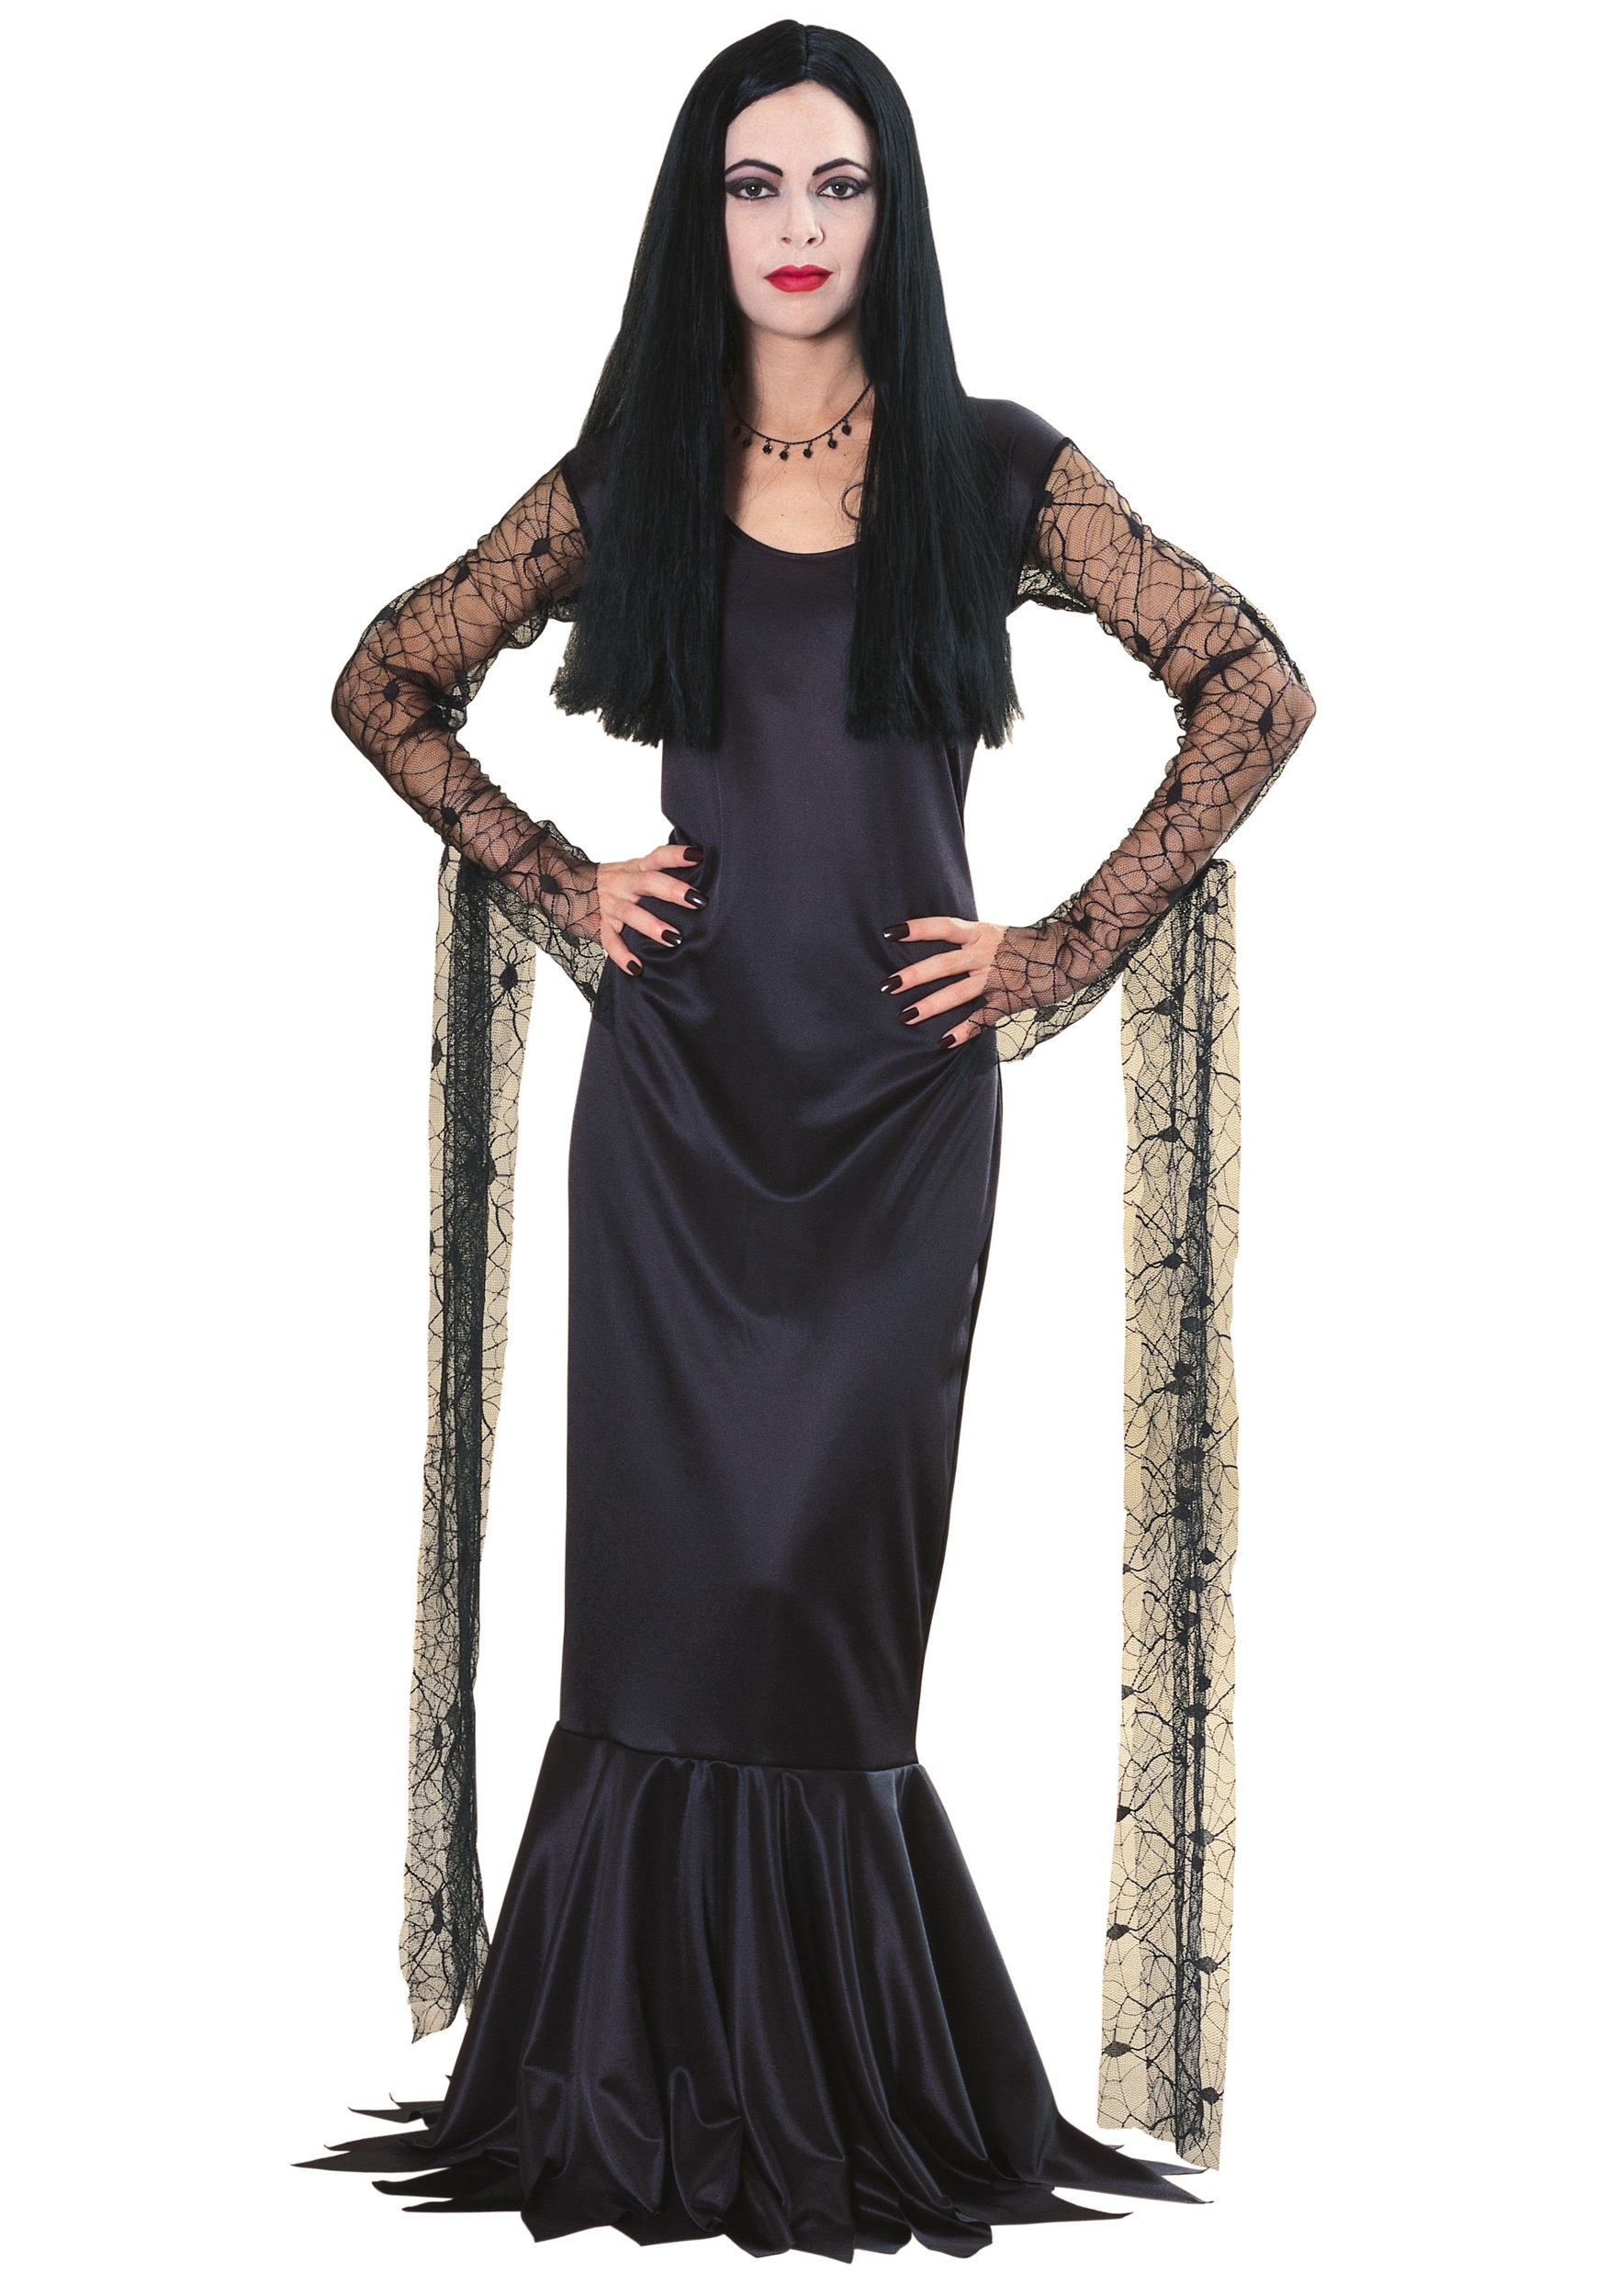 Photos - Fancy Dress Rubies Costume Co. Inc Morticia Addams Costume for Women Black RU15526 